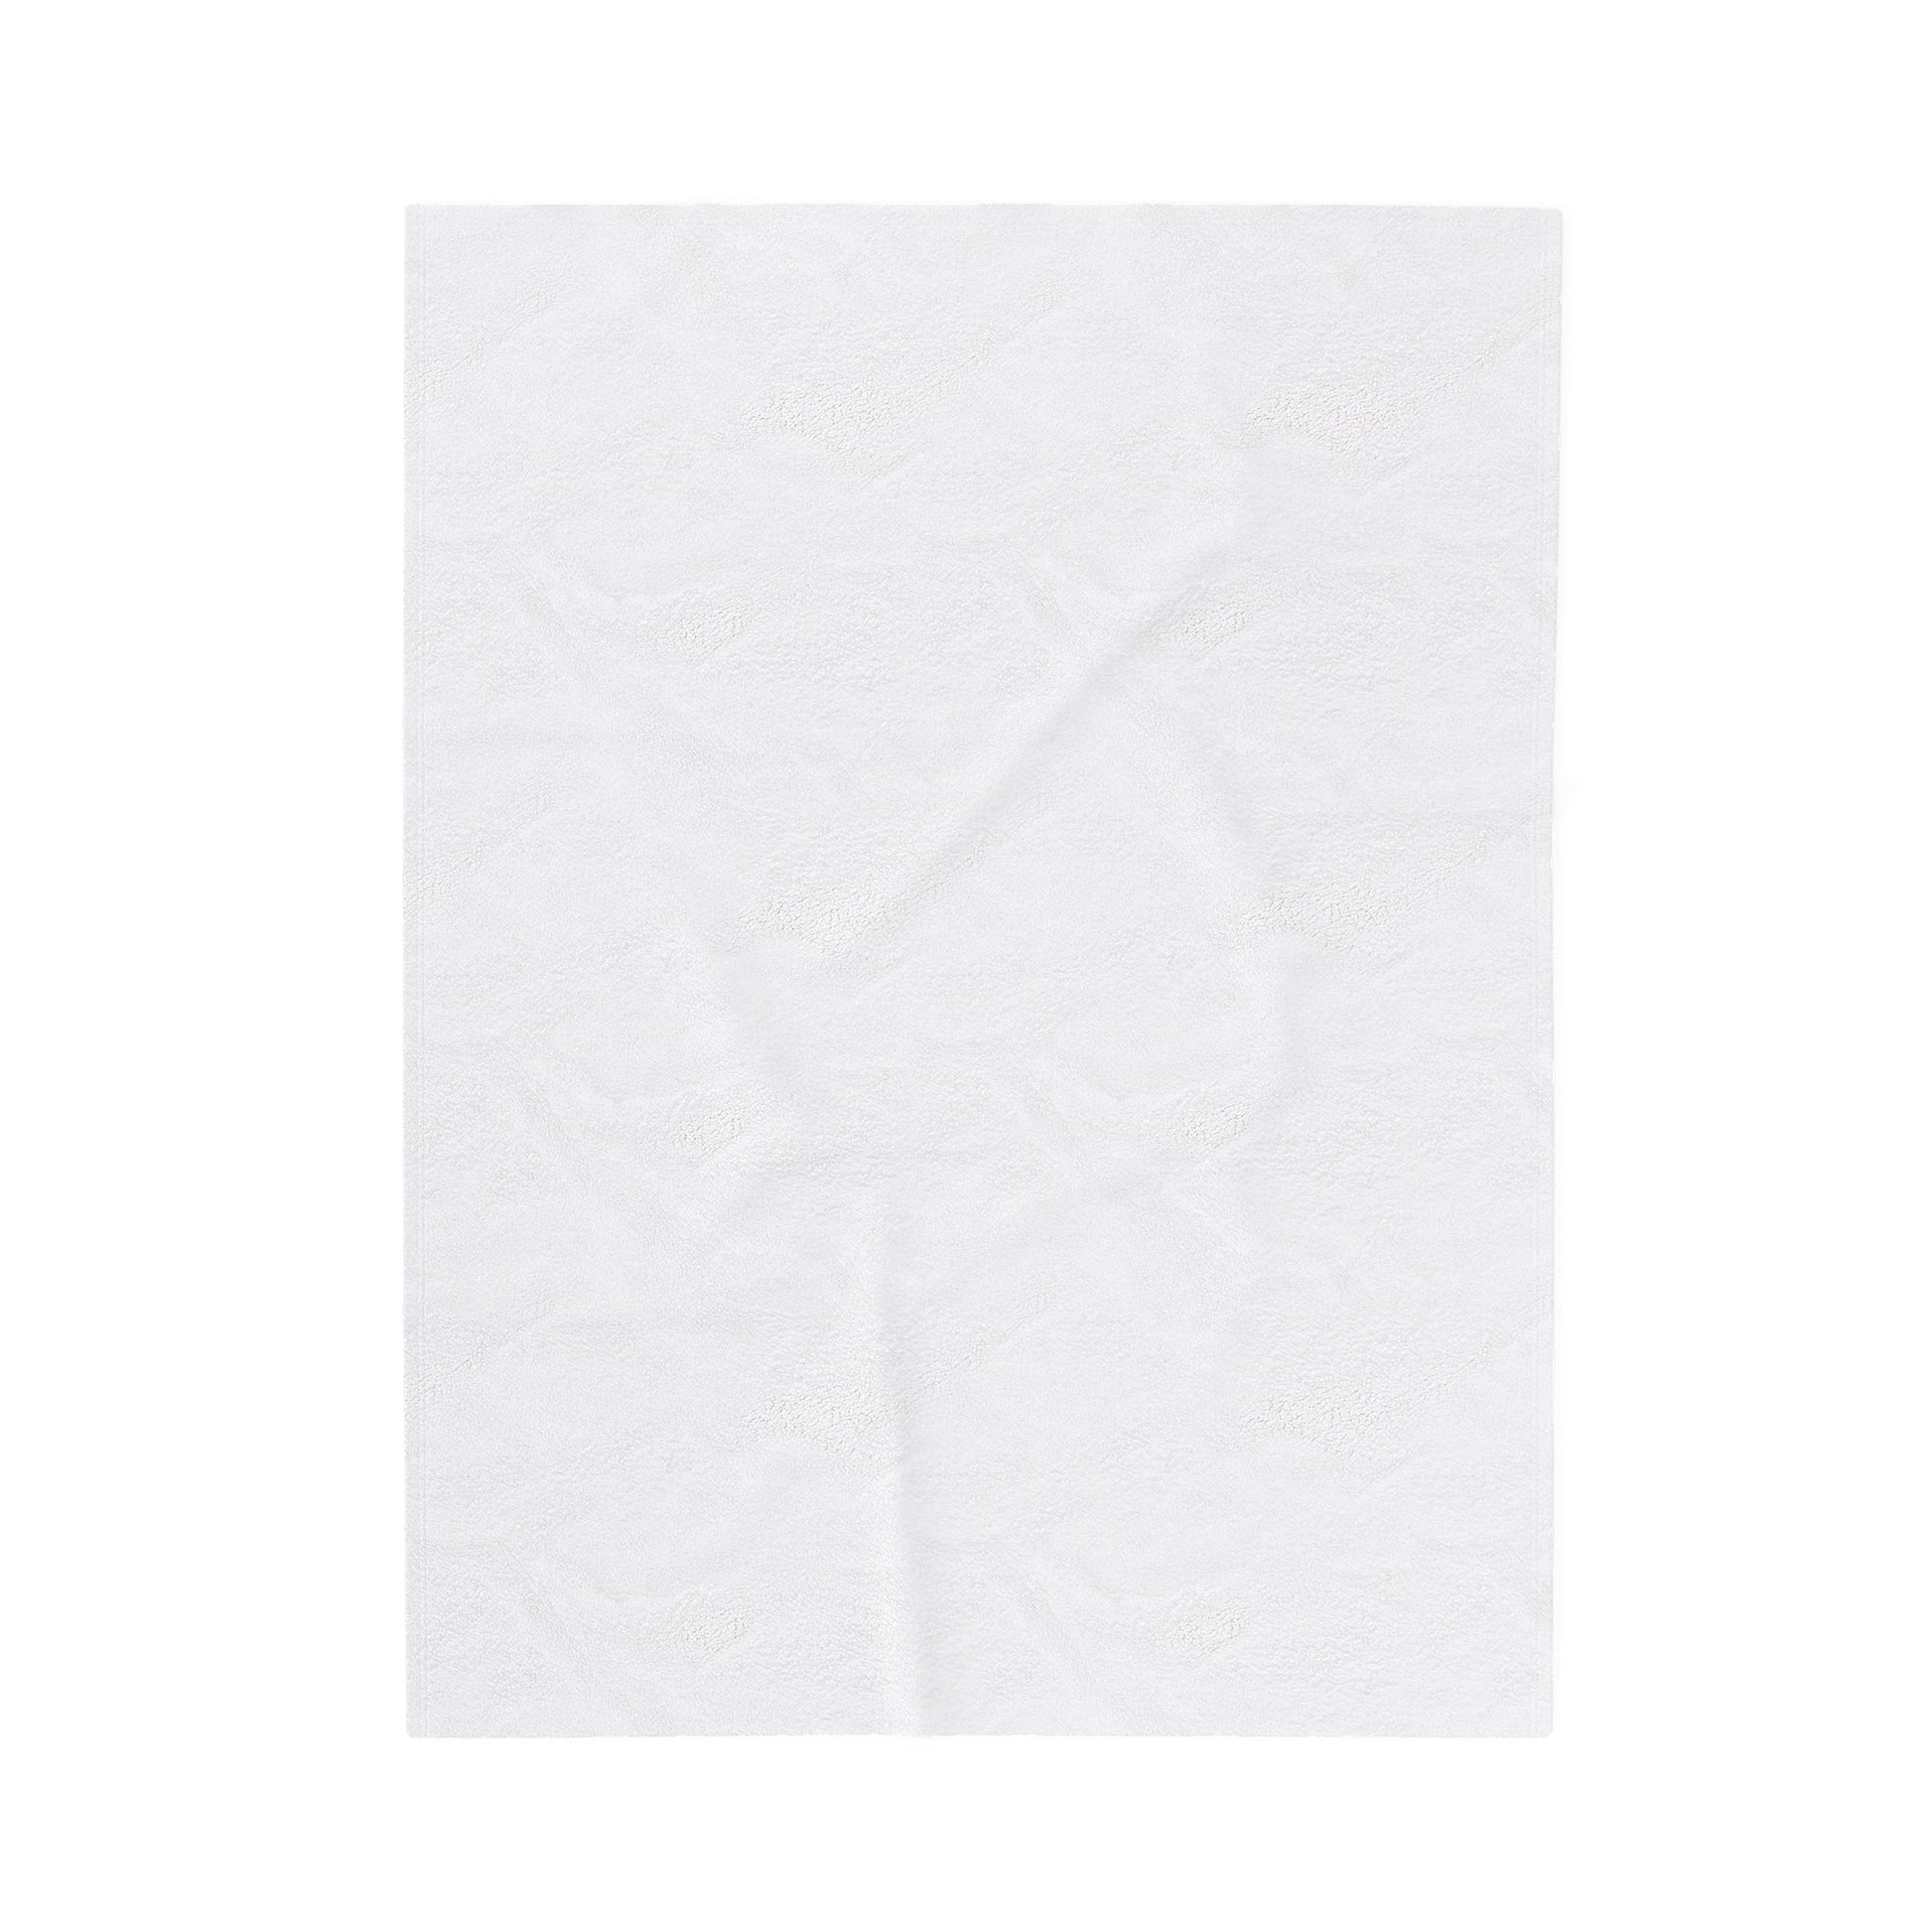 Ace KAOT - Plush Blanket-All Over Prints-Mr.Zao - Krazy Art Gallery